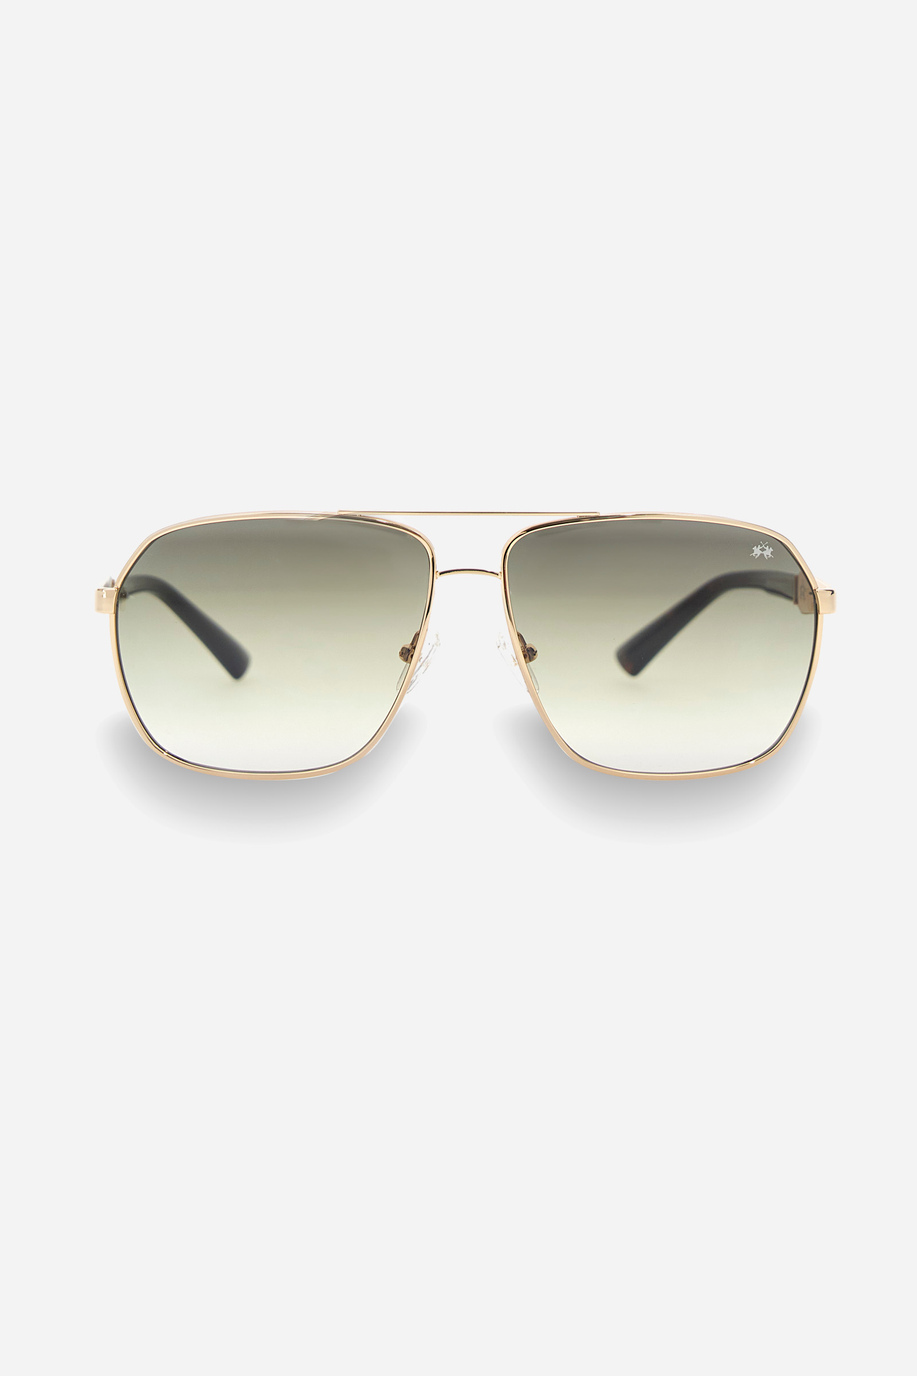 Metal sunglasses aviator style - Glasses | La Martina - Official Online Shop